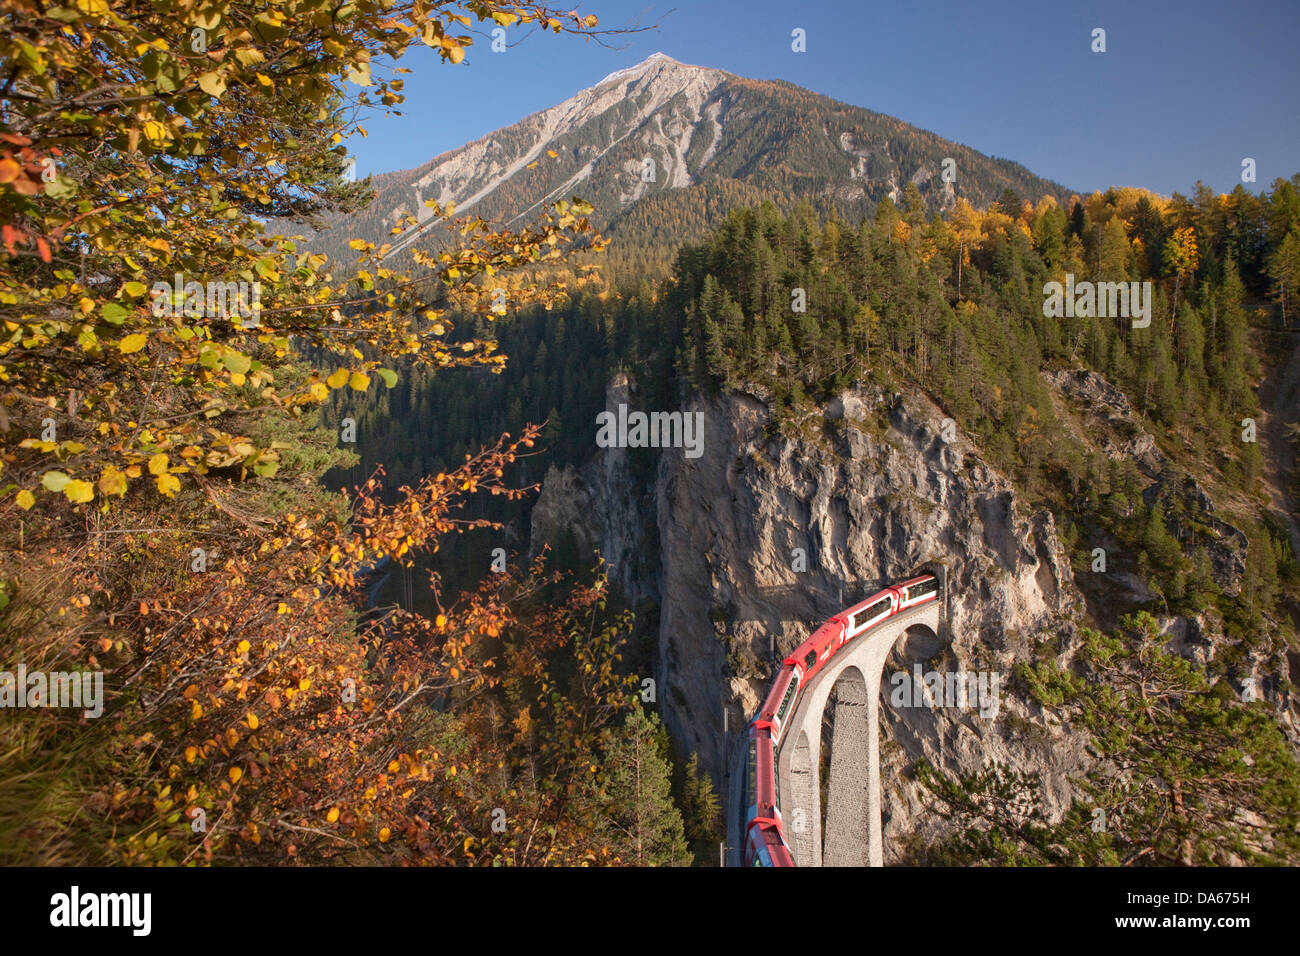 Glacier express, Landwasserviadukt, road, railway, train, railroad, bridge, autumn, wood, forest, canton, GR, Graubünden, Grison Stock Photo